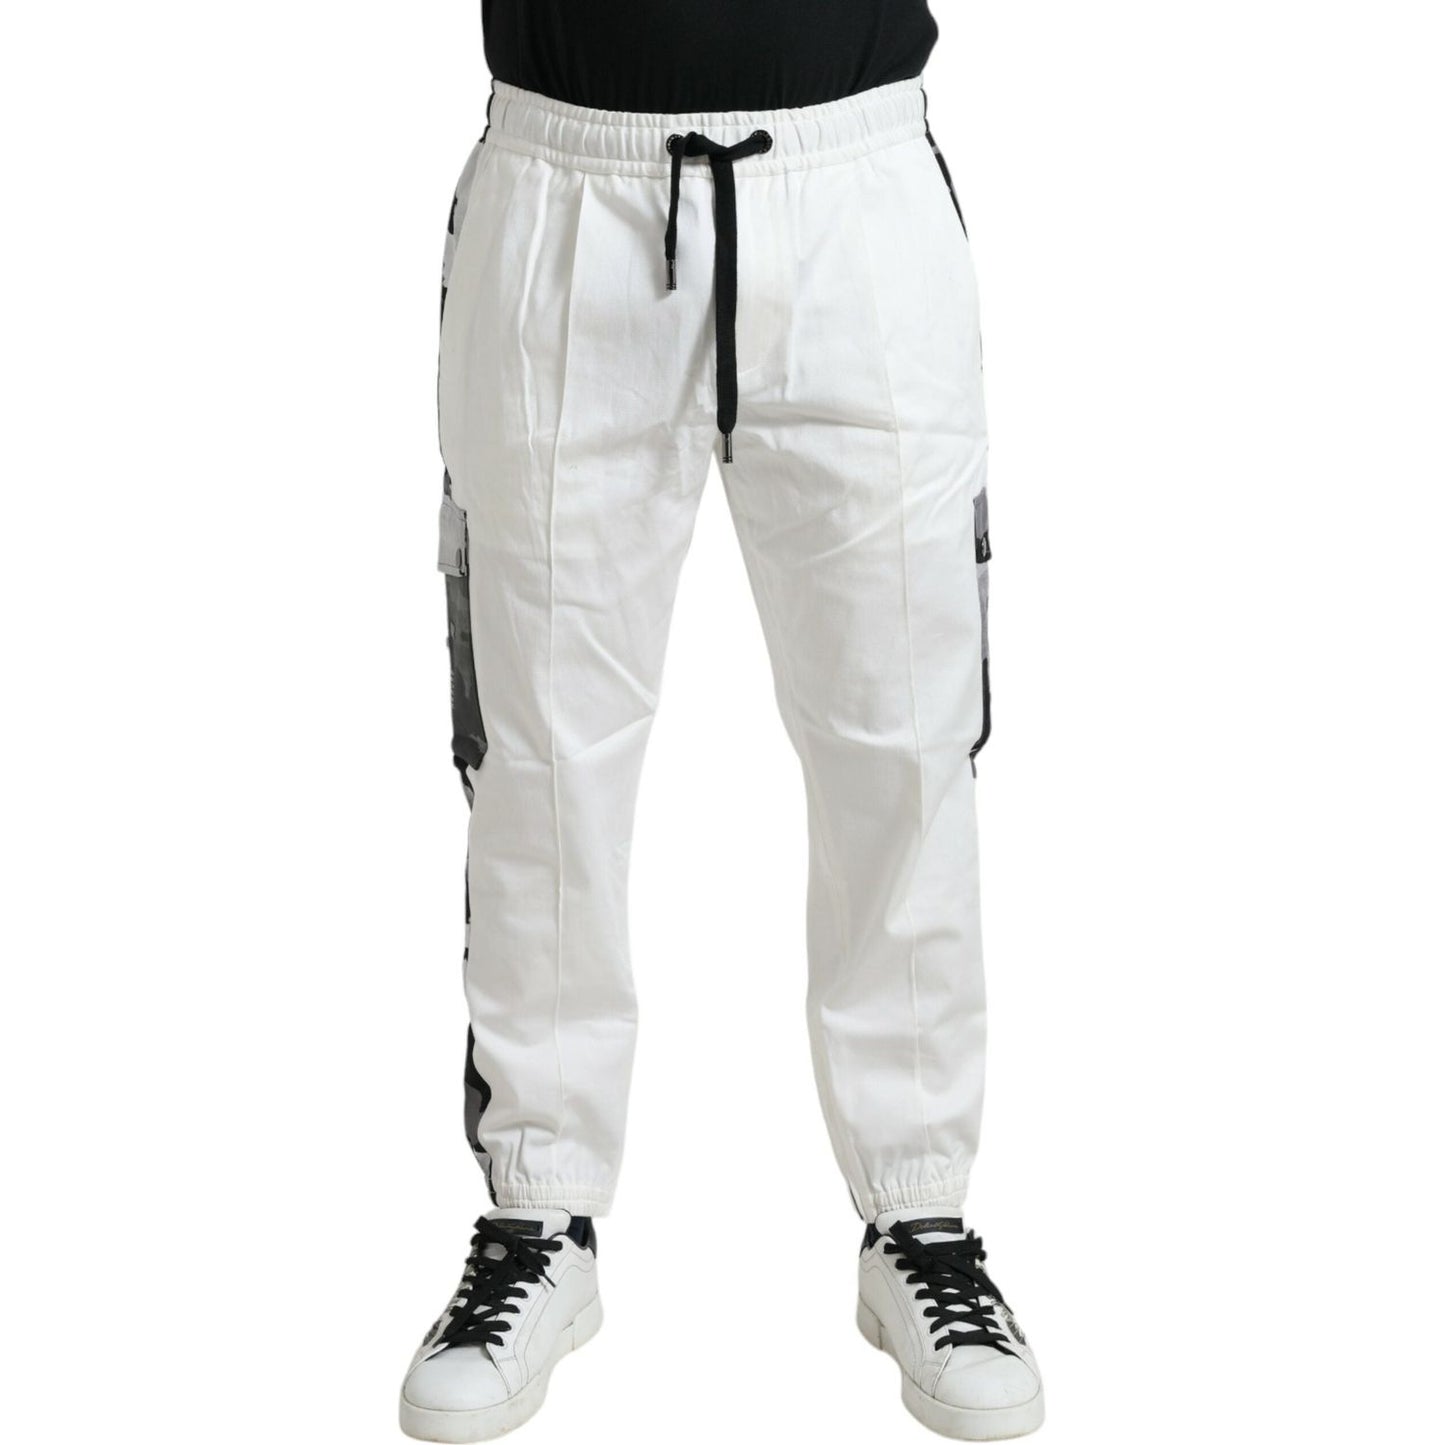 Dolce & Gabbana Elegant White Cotton Blend Jogger Pants white-cotton-blend-jogger-men-sweatpants-pants 465A0724-BG-scaled-40ed65fd-bfc.jpg